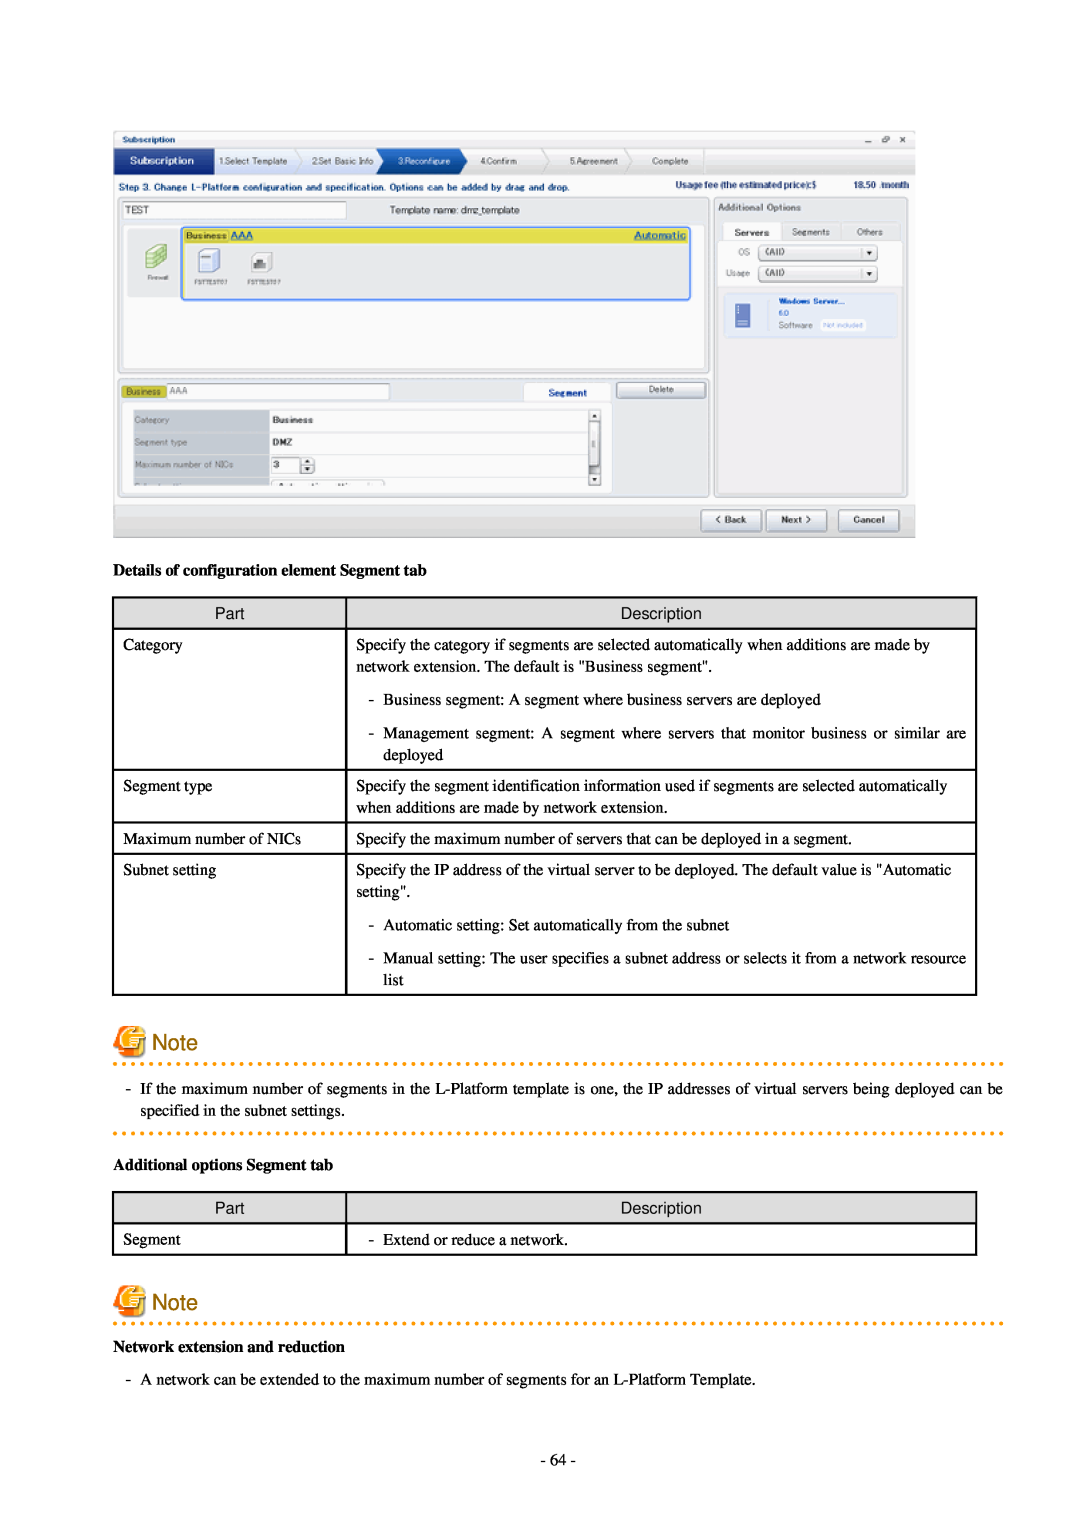 Fujitsu V3.0.0 manual Details of configuration element Segment tab, Additional options Segment tab 